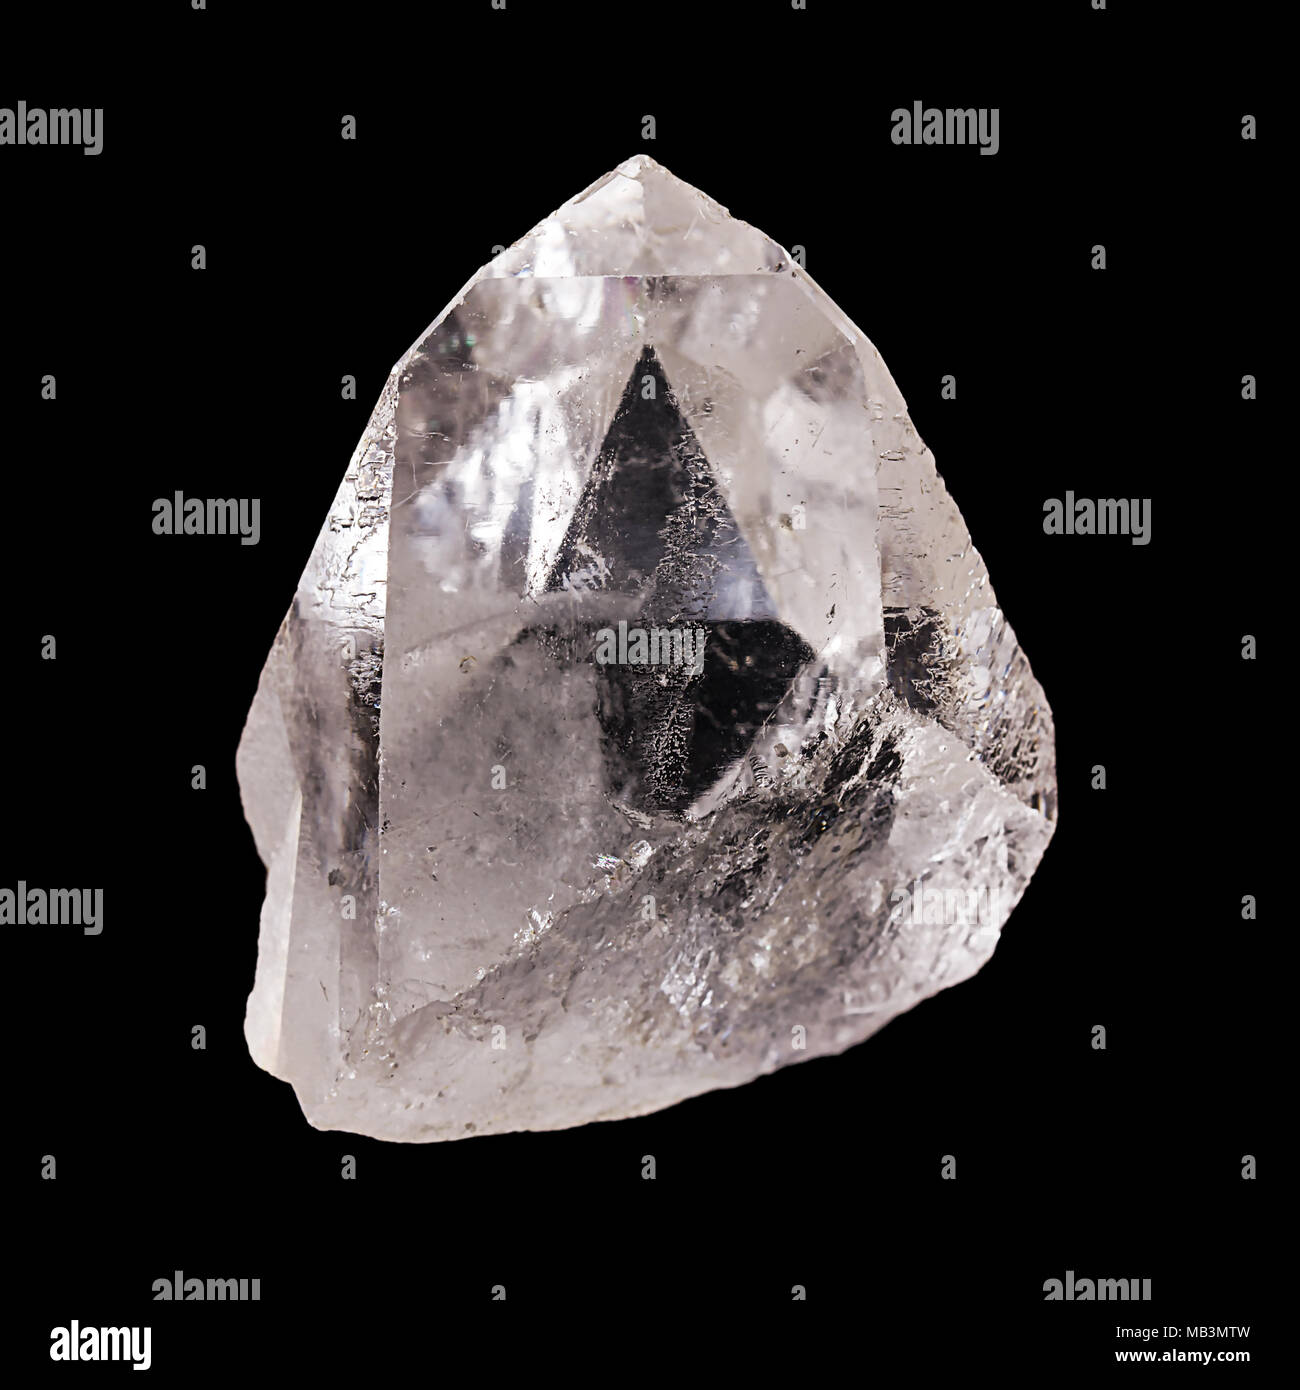 Rough quartz crystal on black background. With pyramid shaped optical illusion inside the mineral. Semi precious gemstone. Silica, silicon dioxide. Stock Photo